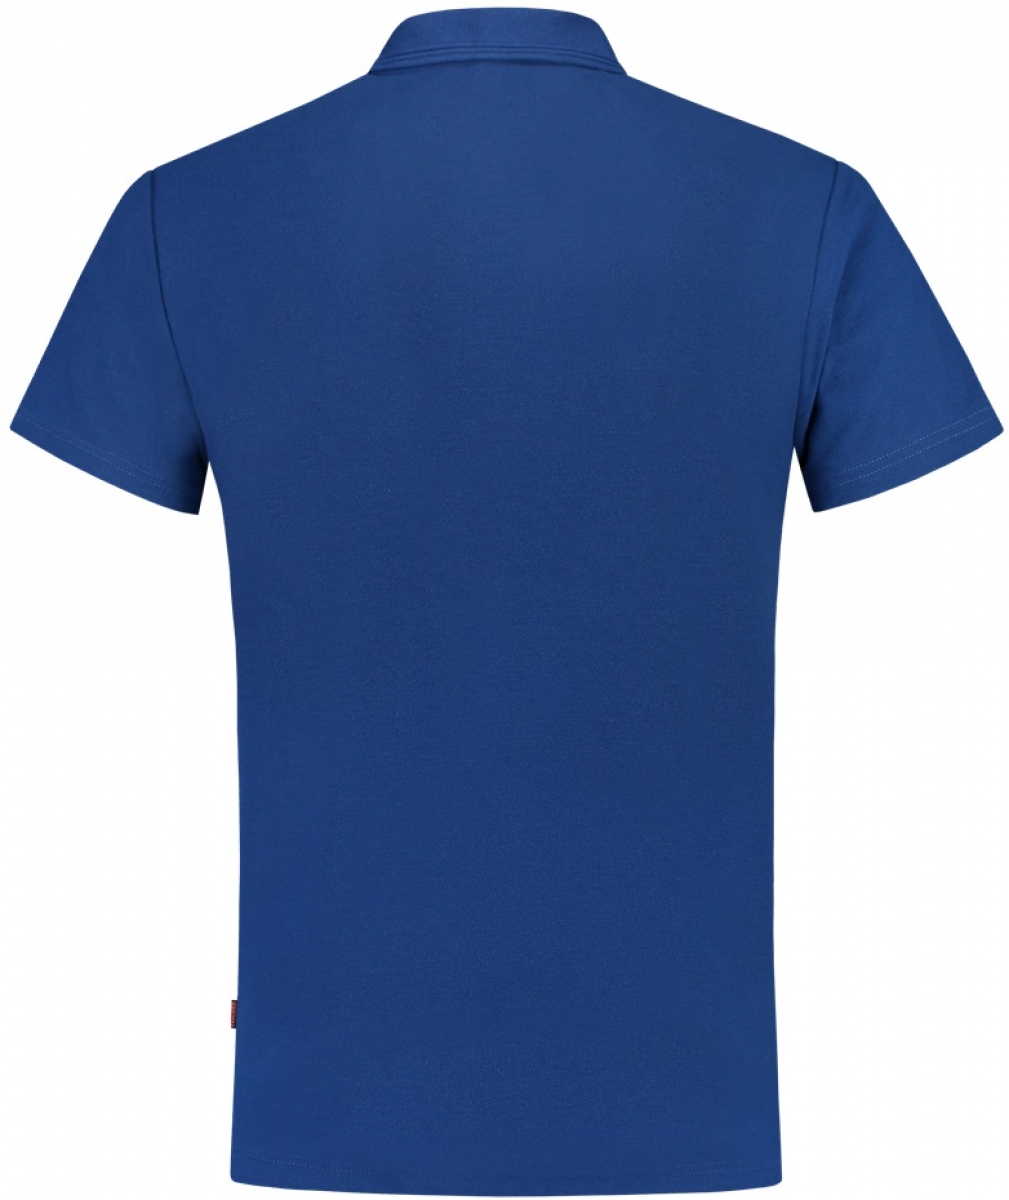 TRICORP-Worker-Shirts, Poloshirt, Basic Fit, Kurzarm, 180 g/m, royalblue